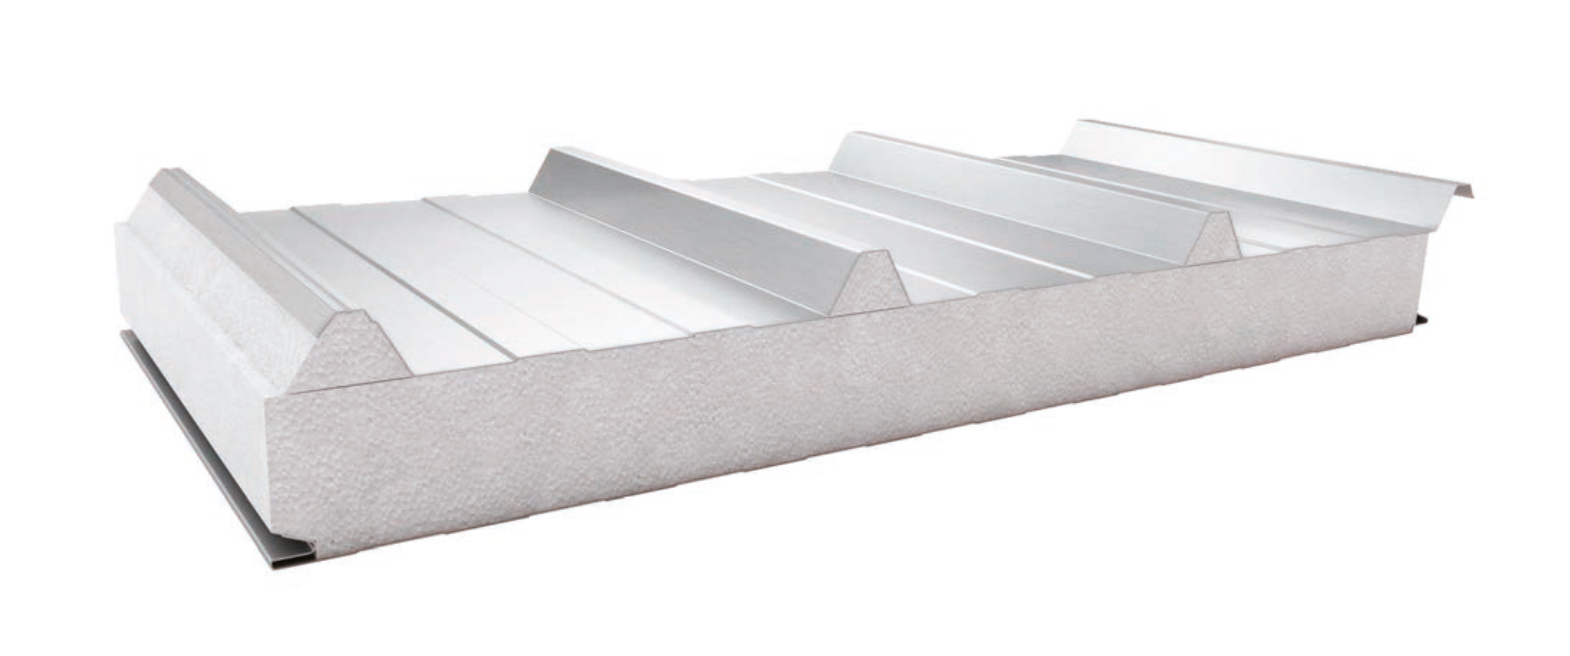 Roof sandwich panels for farms EMR-EPS FARM 1050 with polystyrene foam EPS